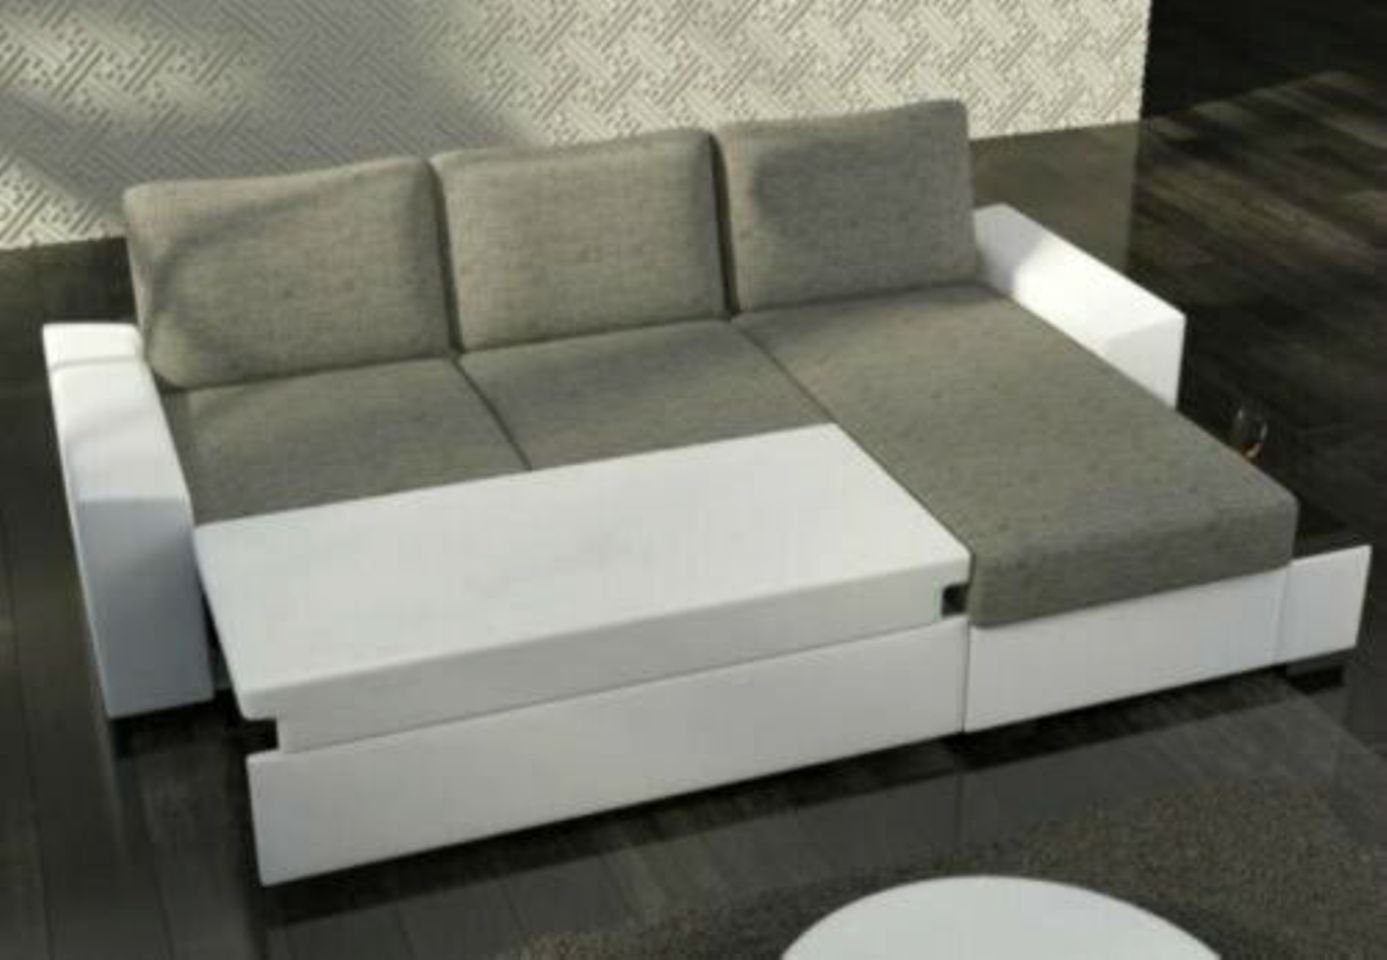 JVmoebel Ecksofa Design Ecksofa Schlafsofa Bettfunktion Sofa Couch Leder Polster, Mit Bettfunktion Grau / Weiß